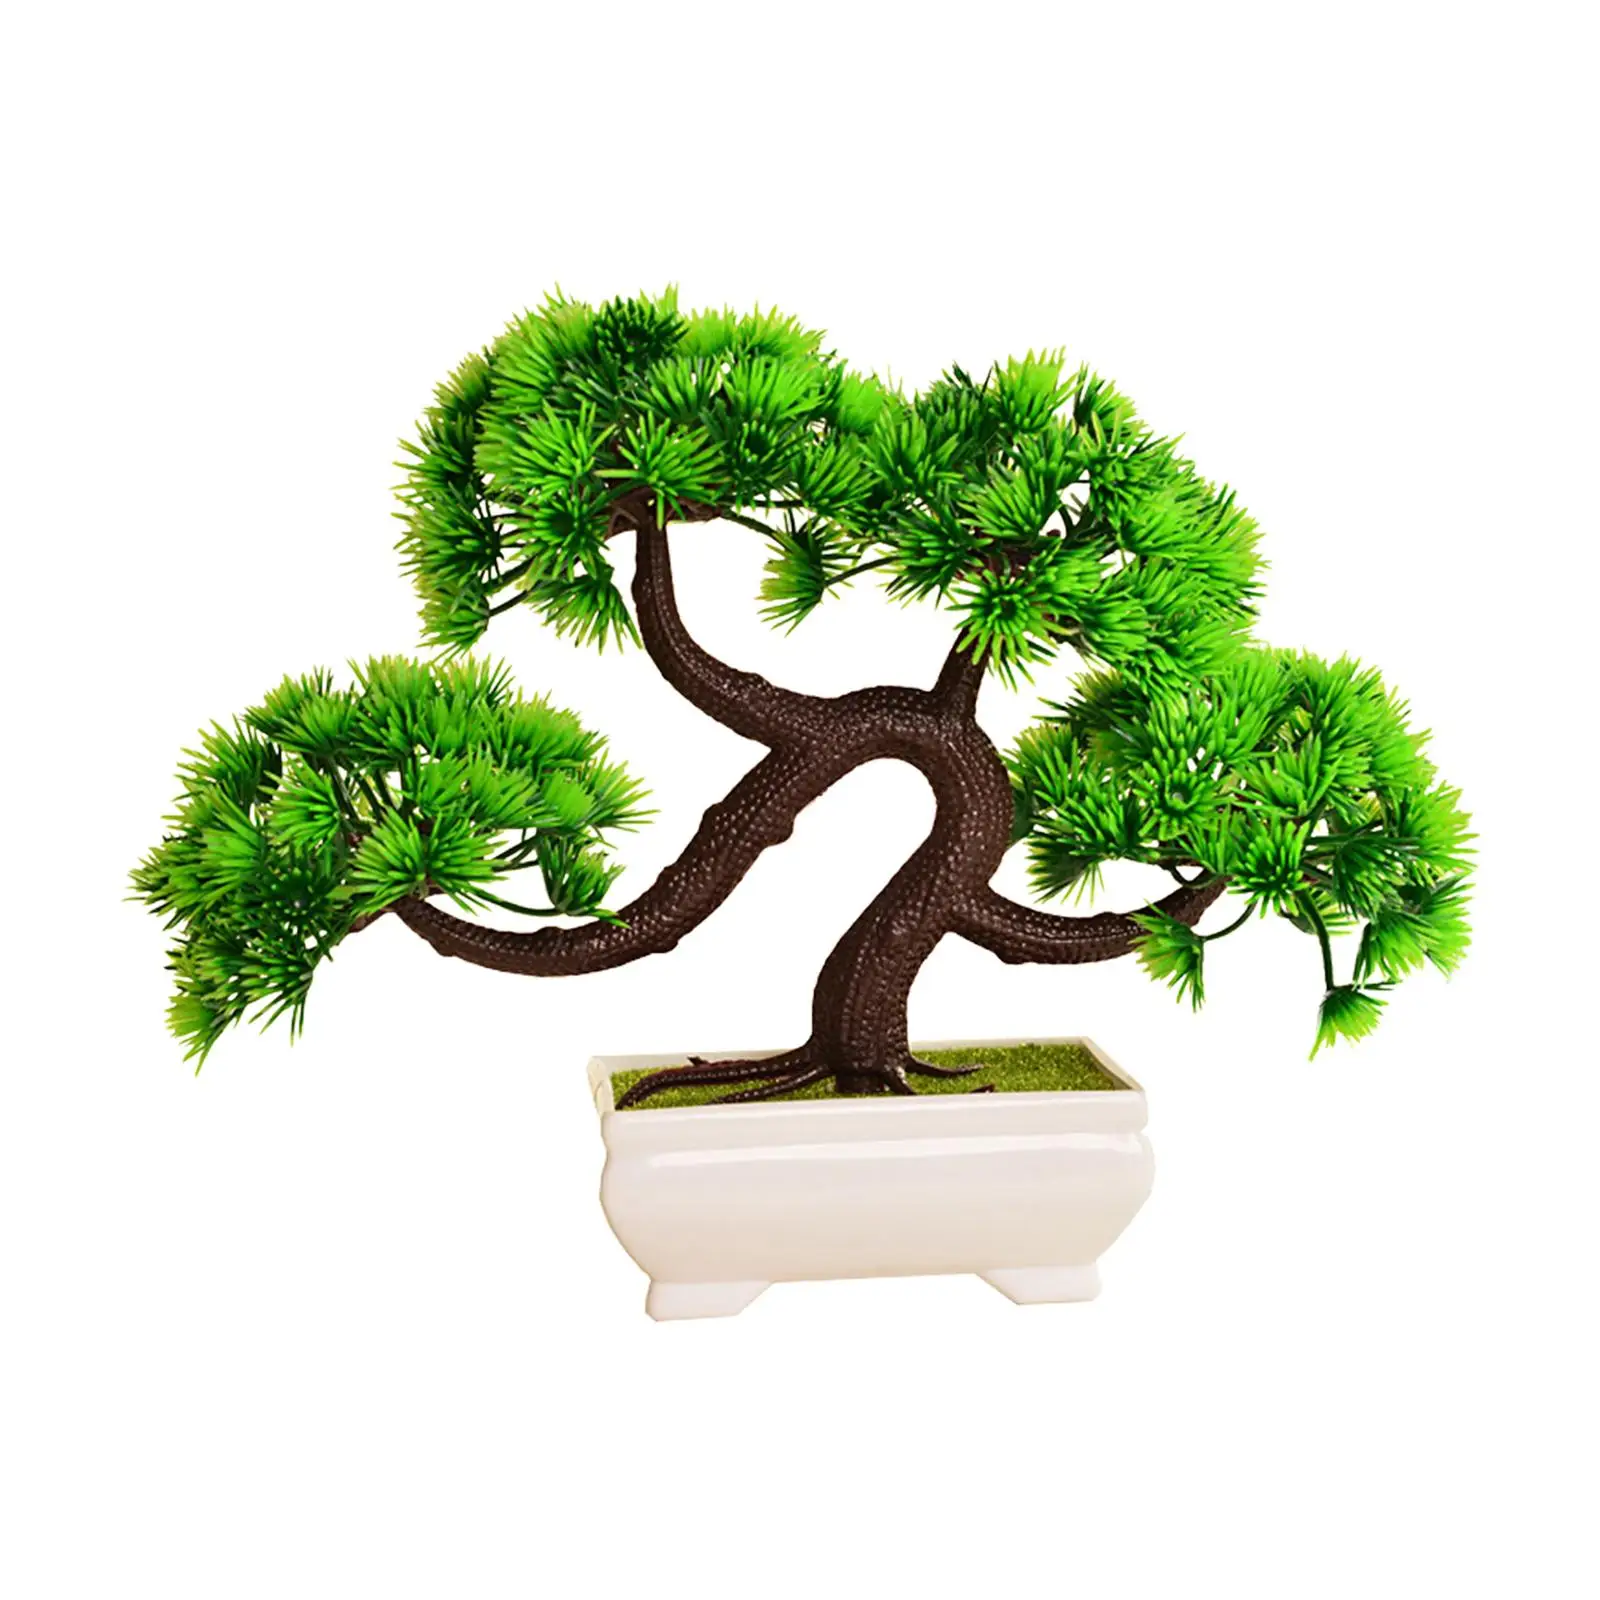 Artificial Bonsai Tree Desktop Small Fake Tree for Bookshelf Office Tabletop